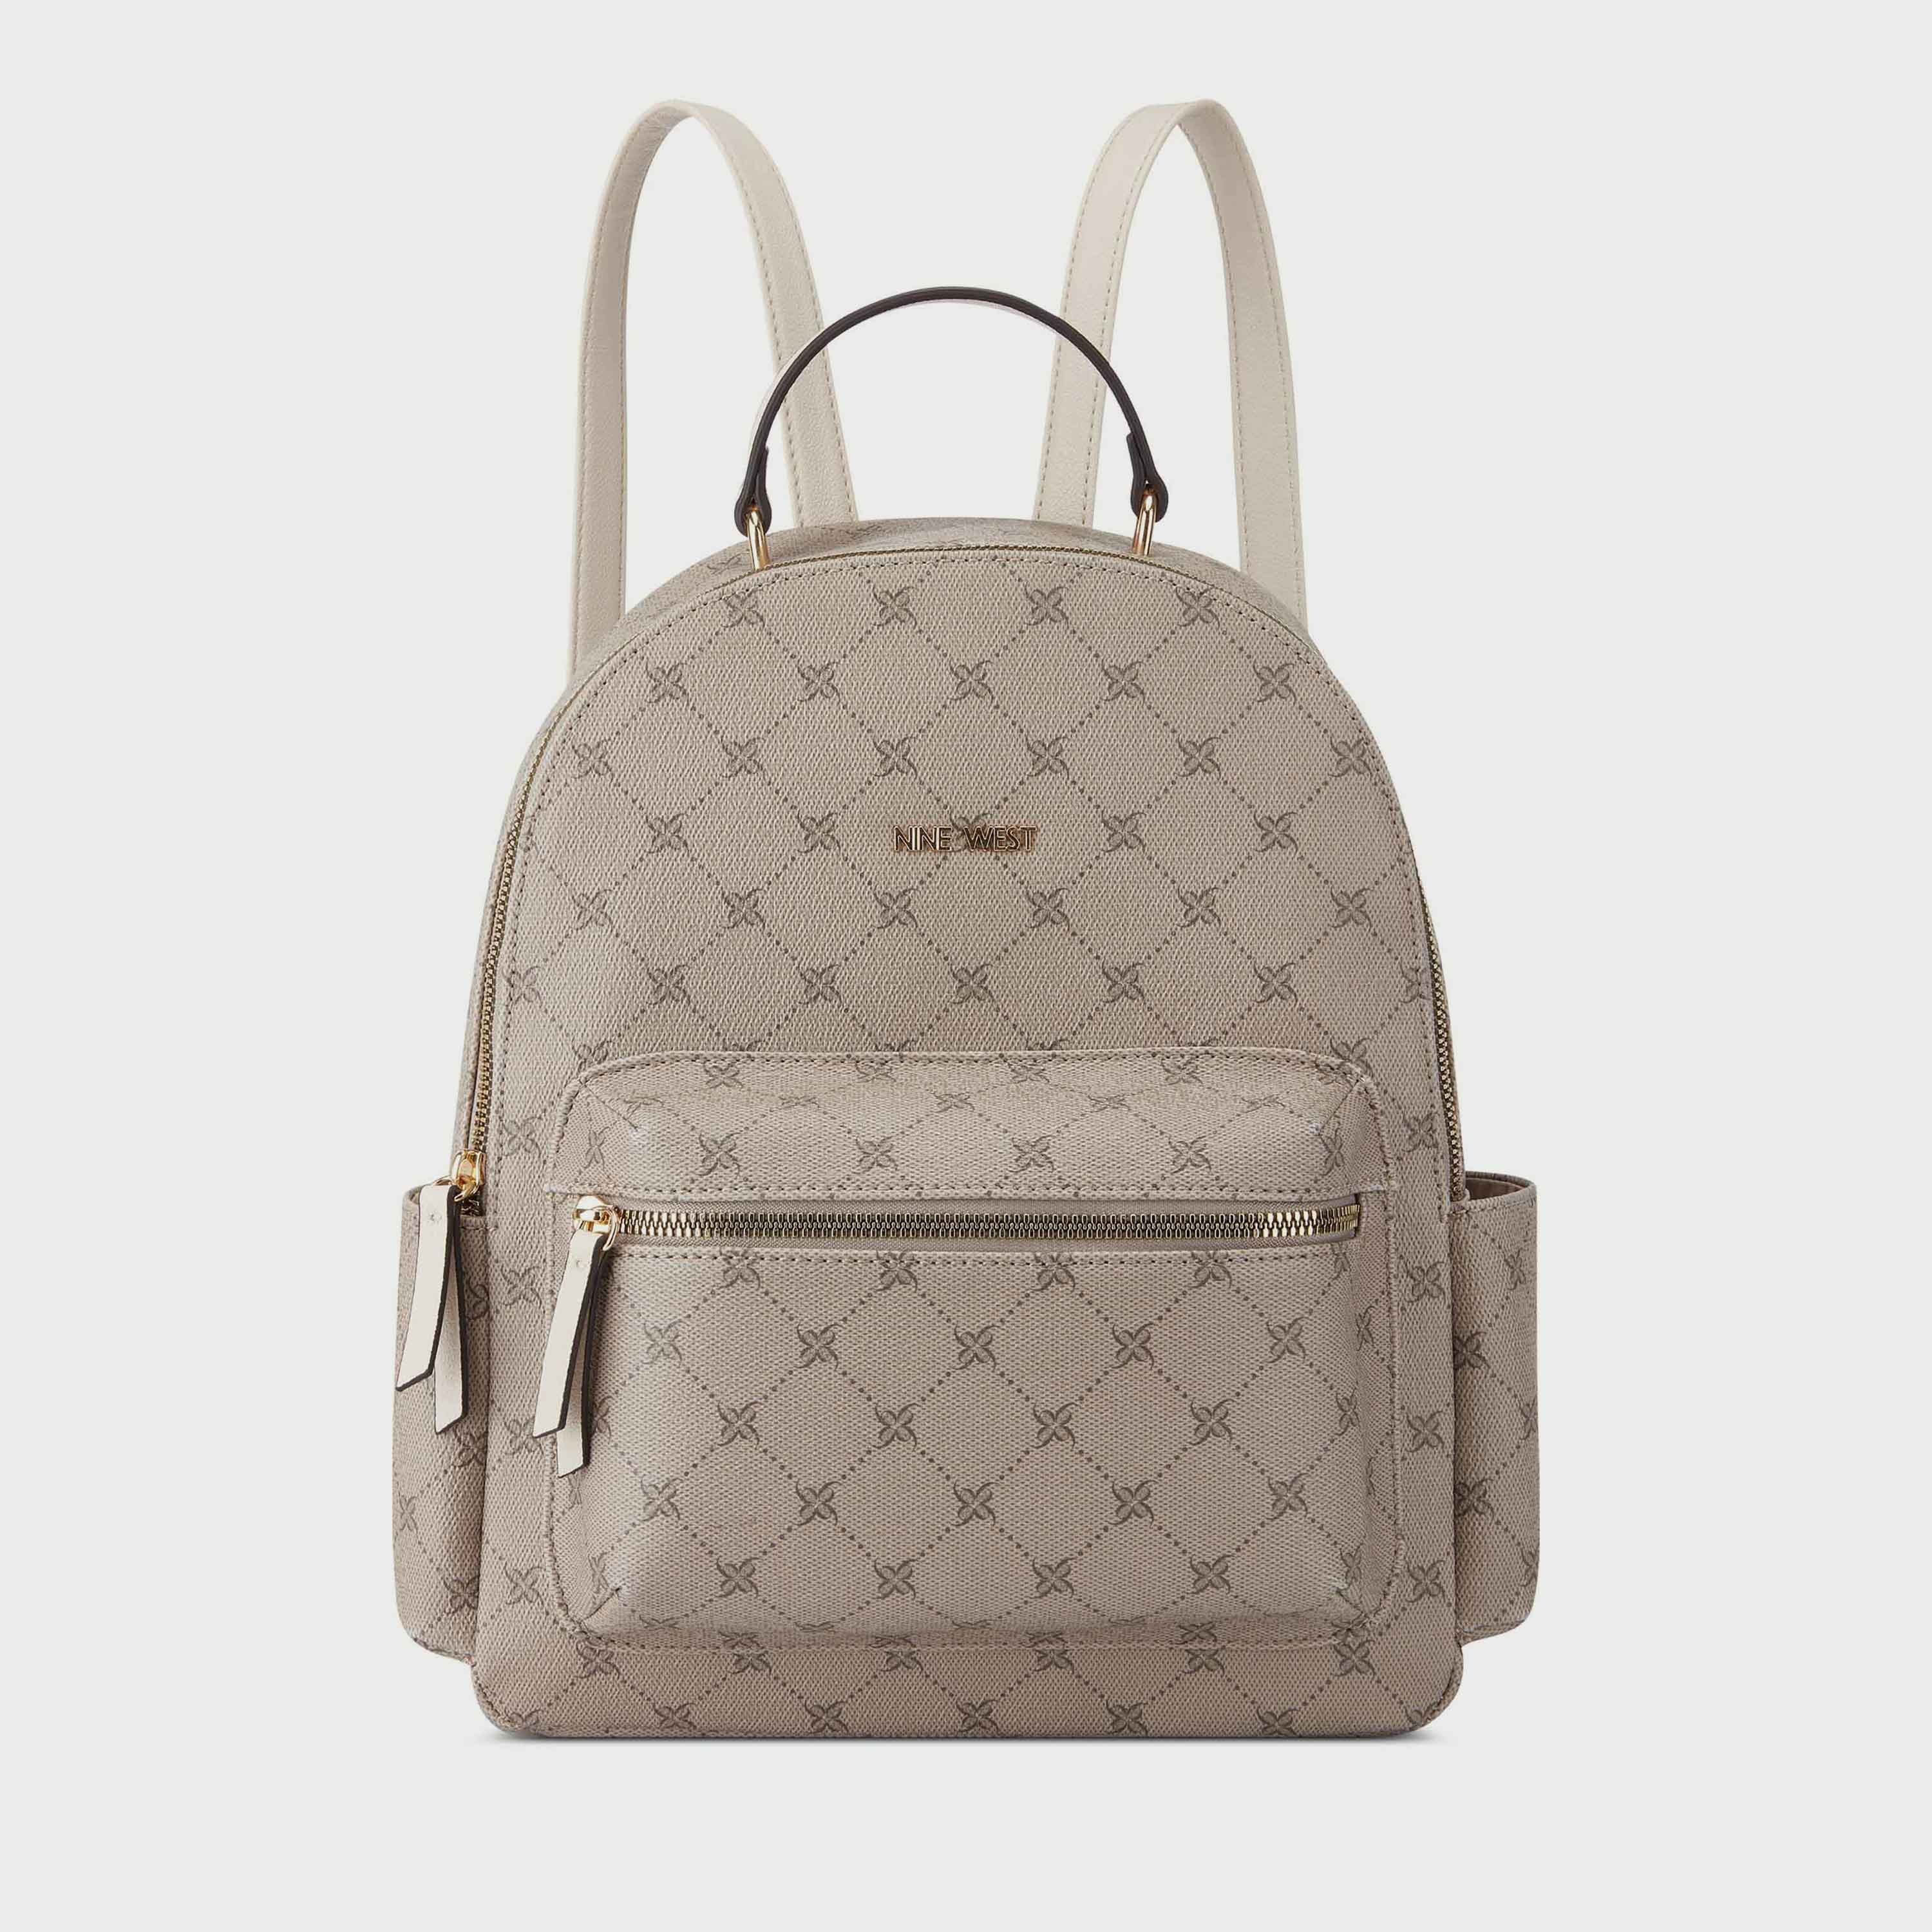 Nine West Amelia Backpack - Macy's | Handbag accessories, Purses, Bags